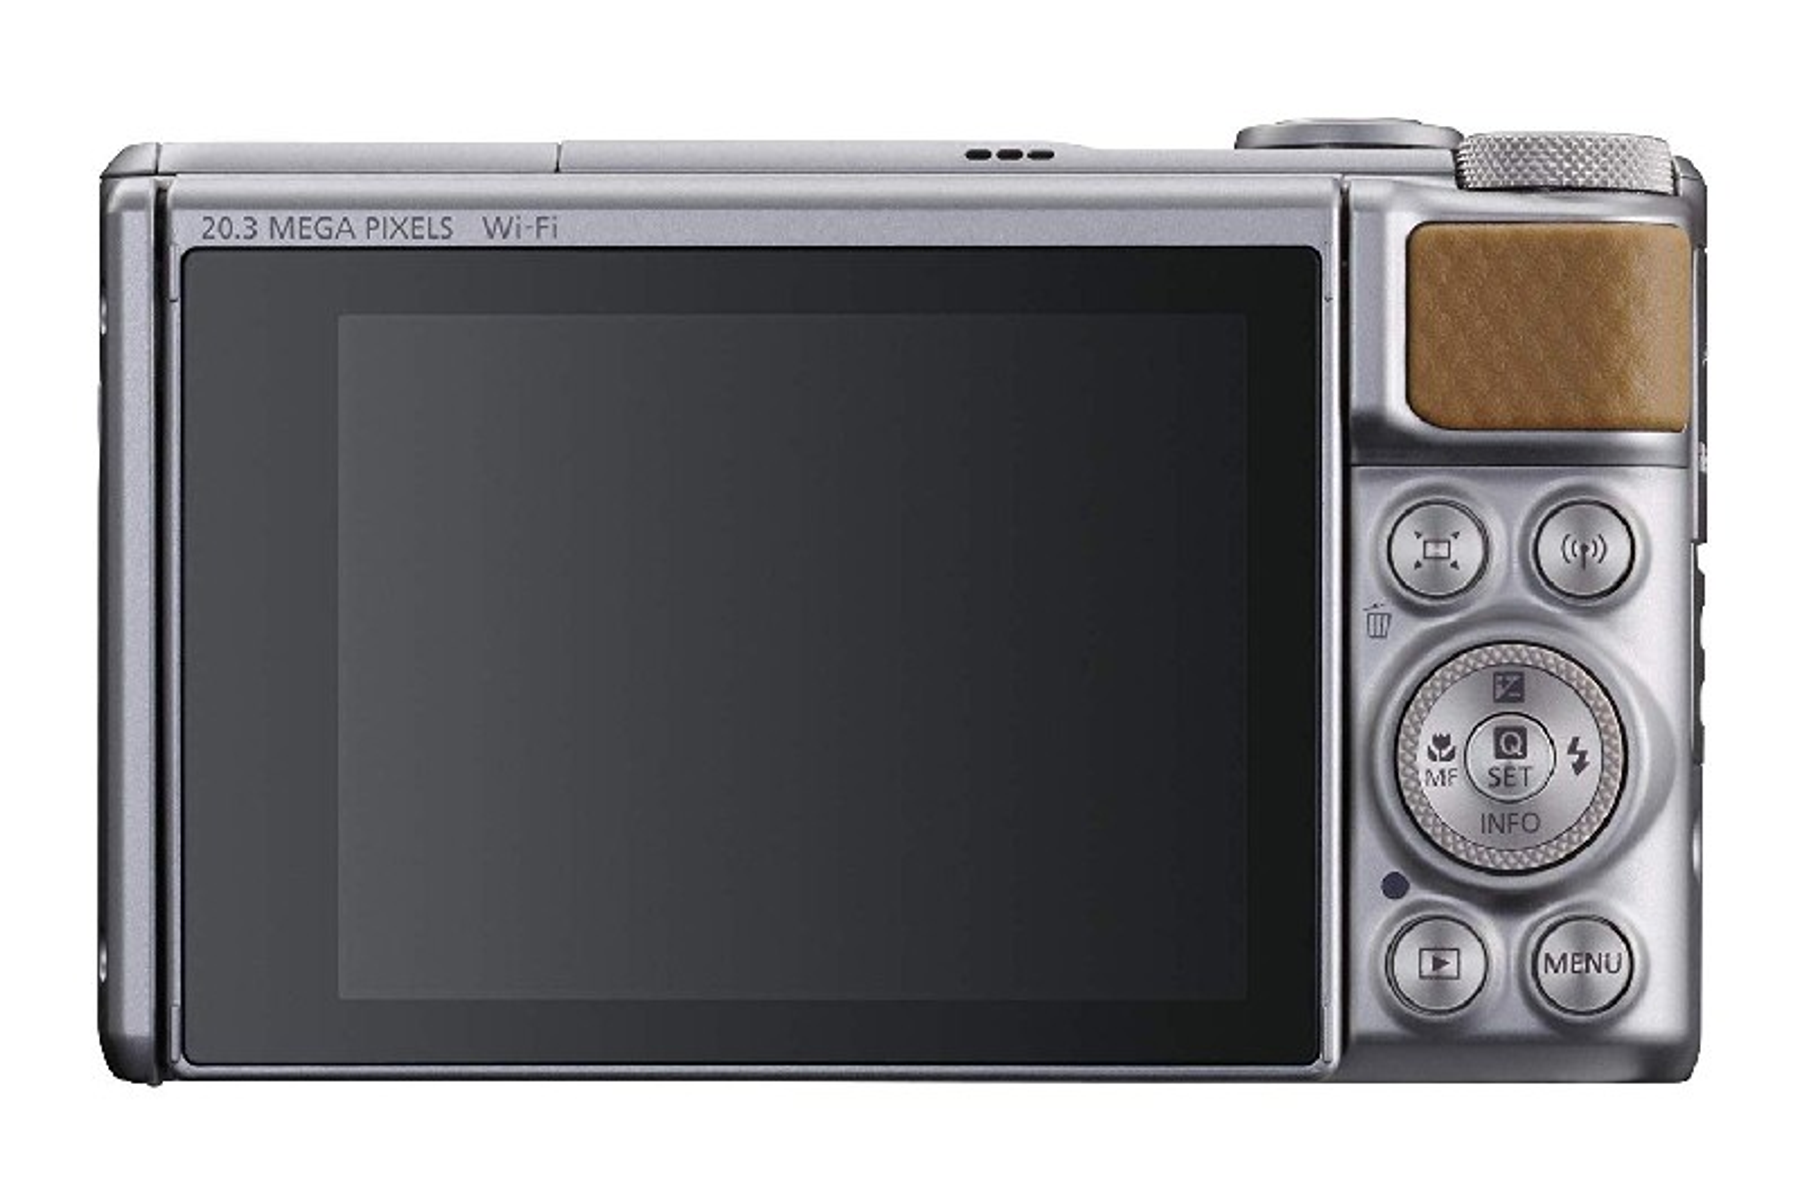 Digitalkamera 40fach WLAN- opt. CANON Zoom, POWERSHOT HS 740 (TFT), Silber, SX LCD